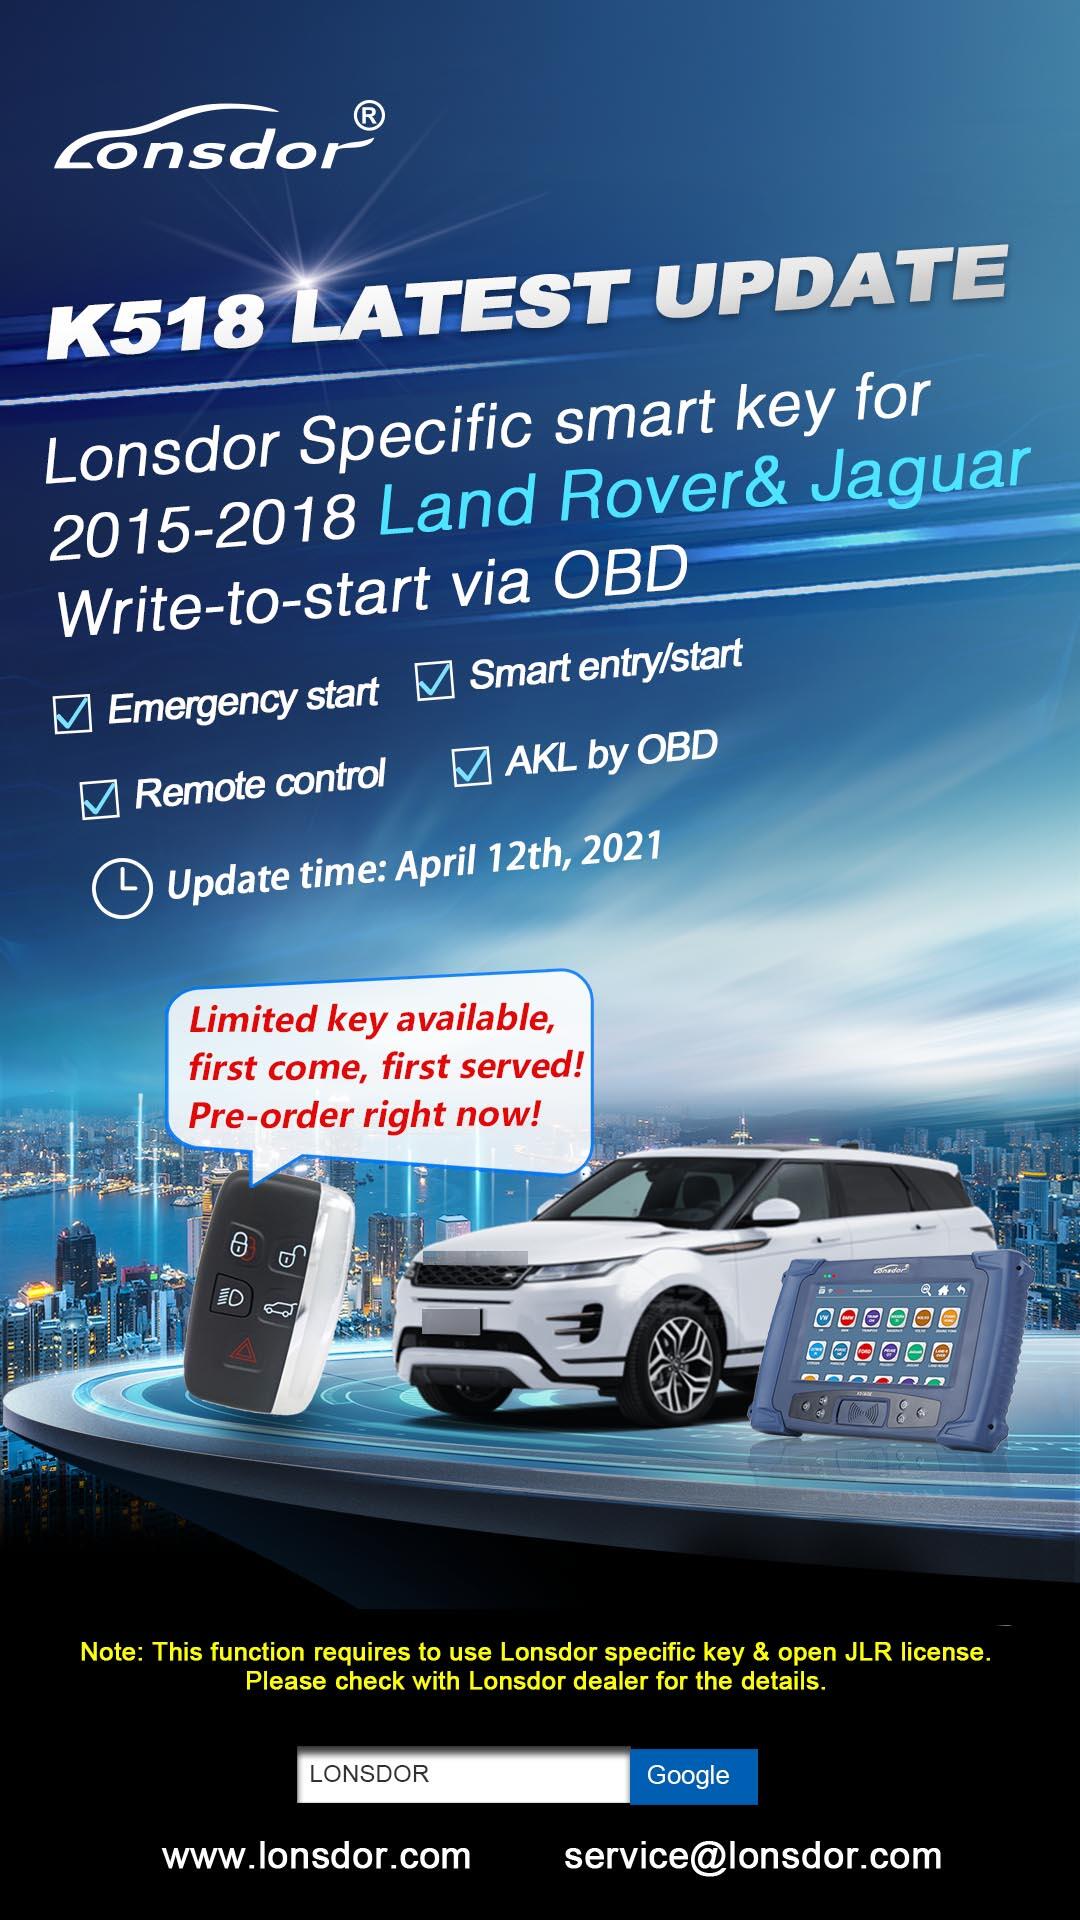 Lonsdor Specific smart key for 2015-2018 Land rover and Jaguar  write-to-start via OBD